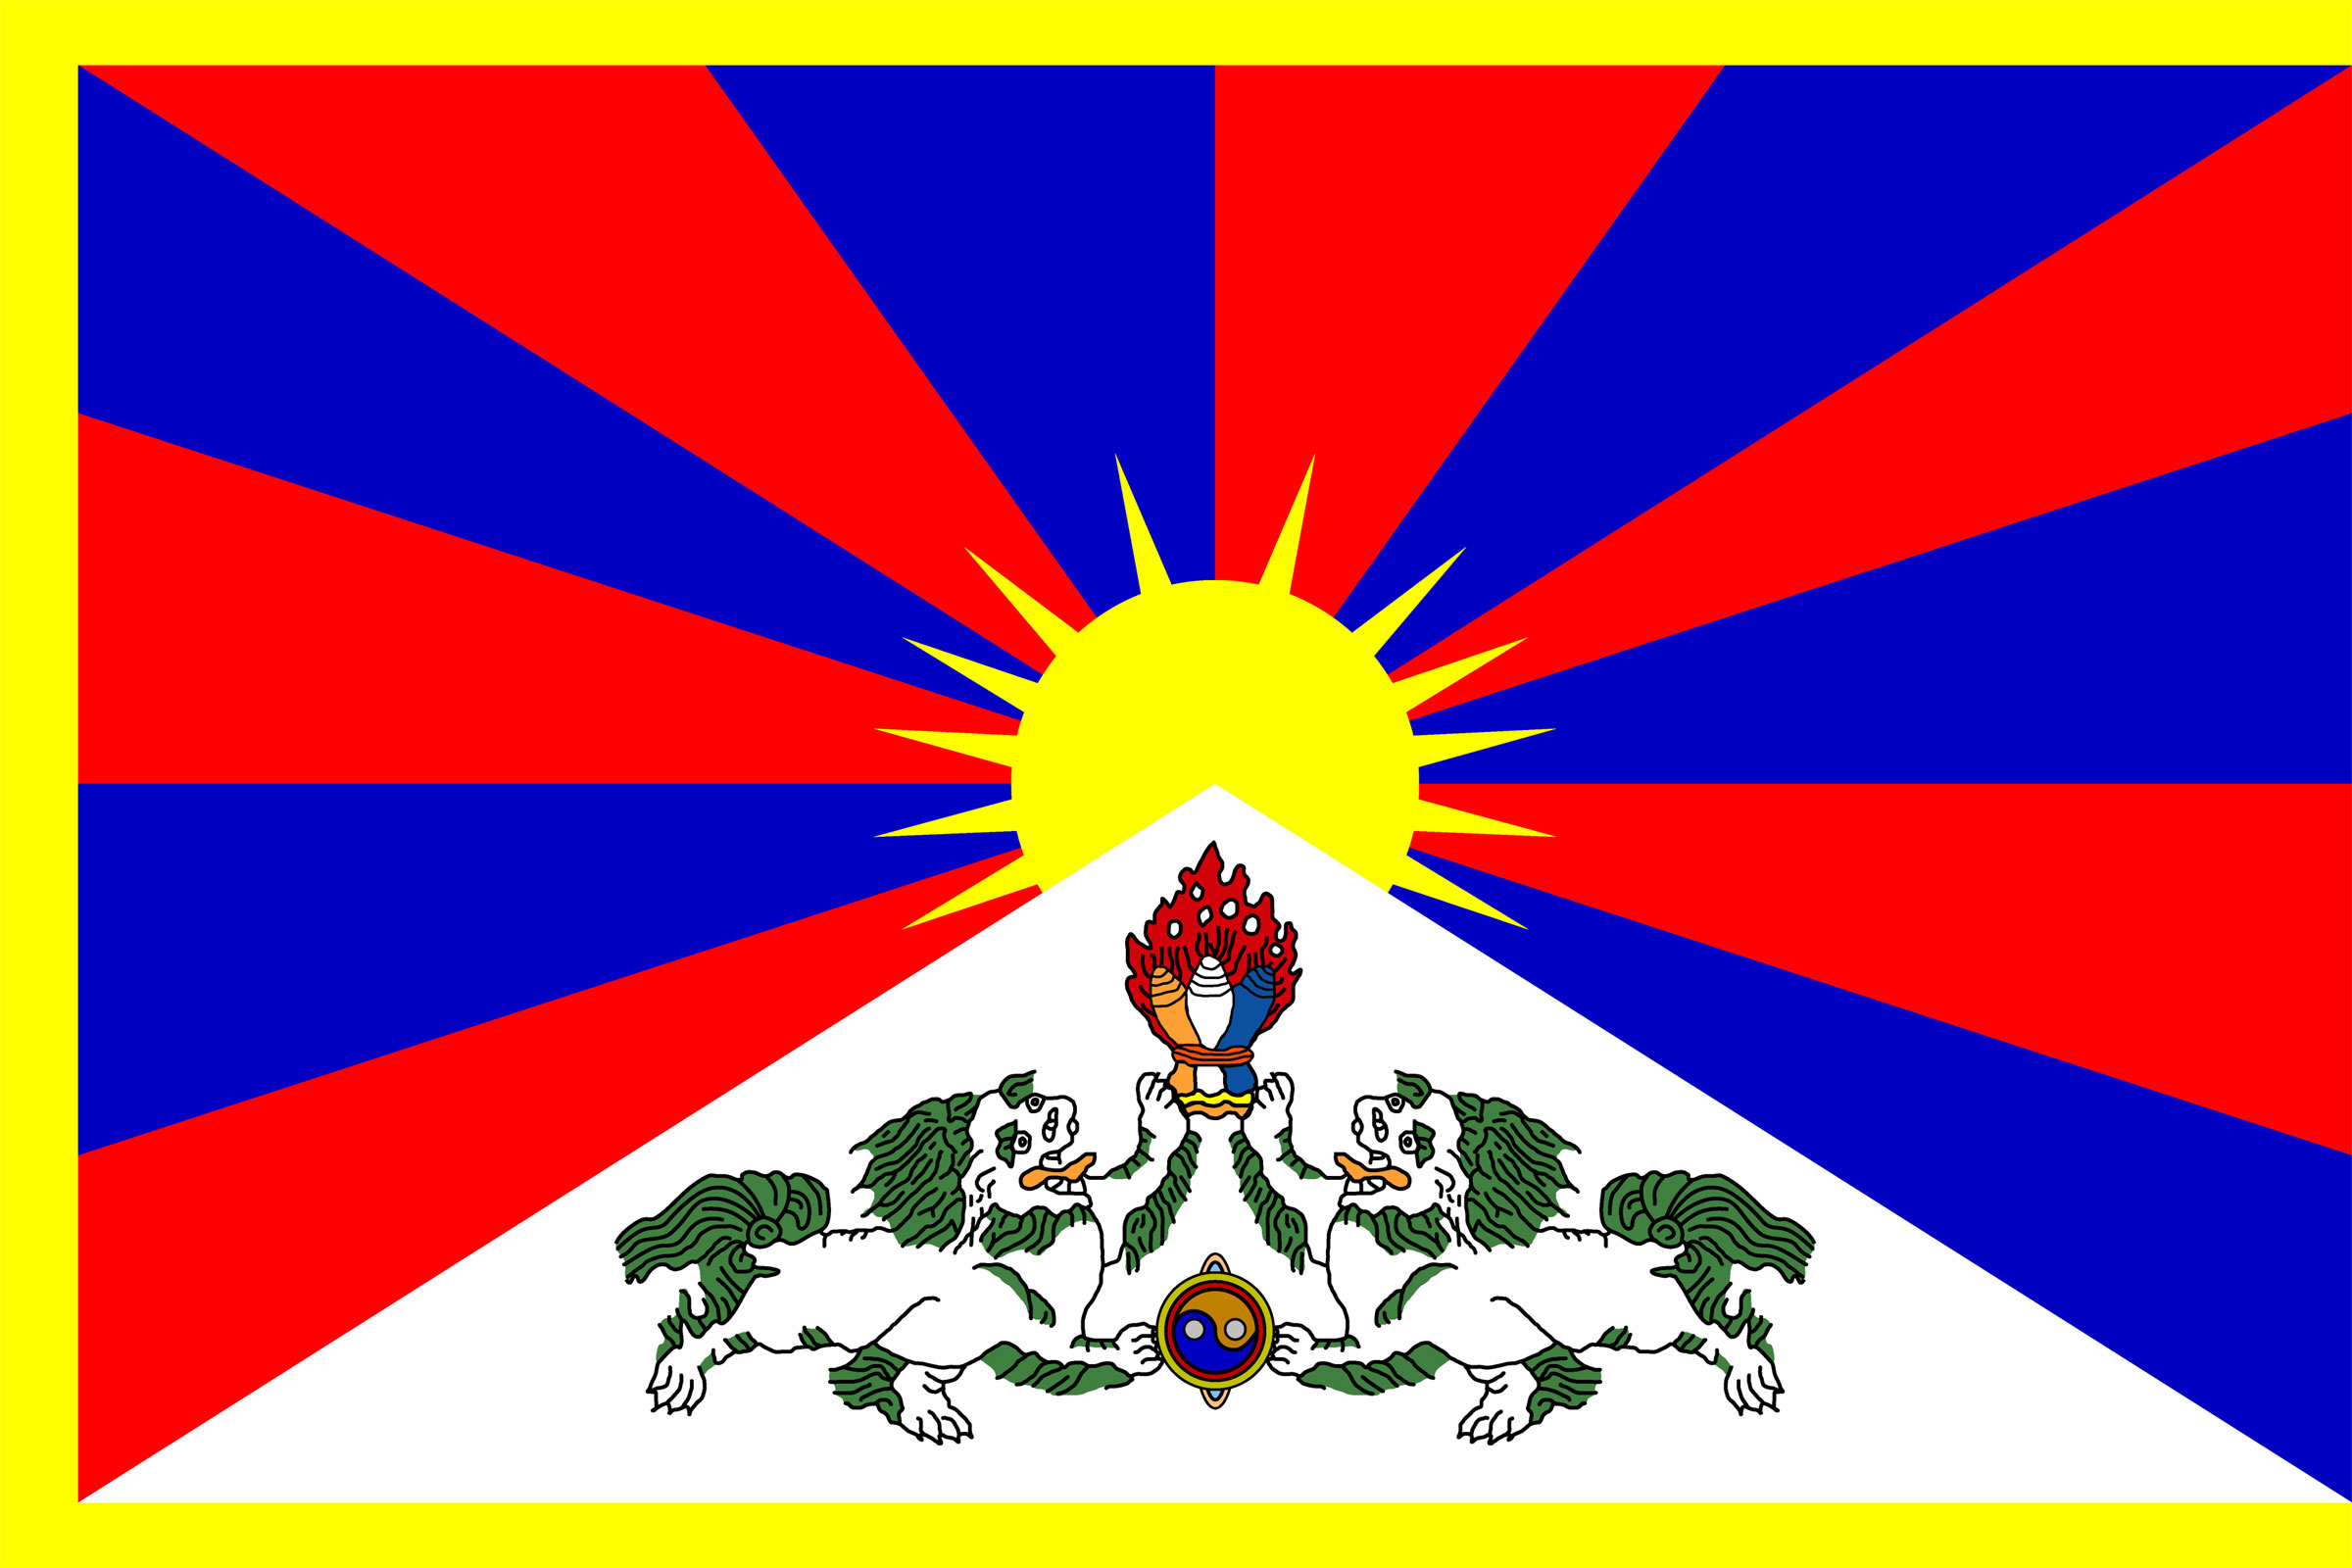 files/content/images/tibet_flag/Flag_of_Tibet.jpg